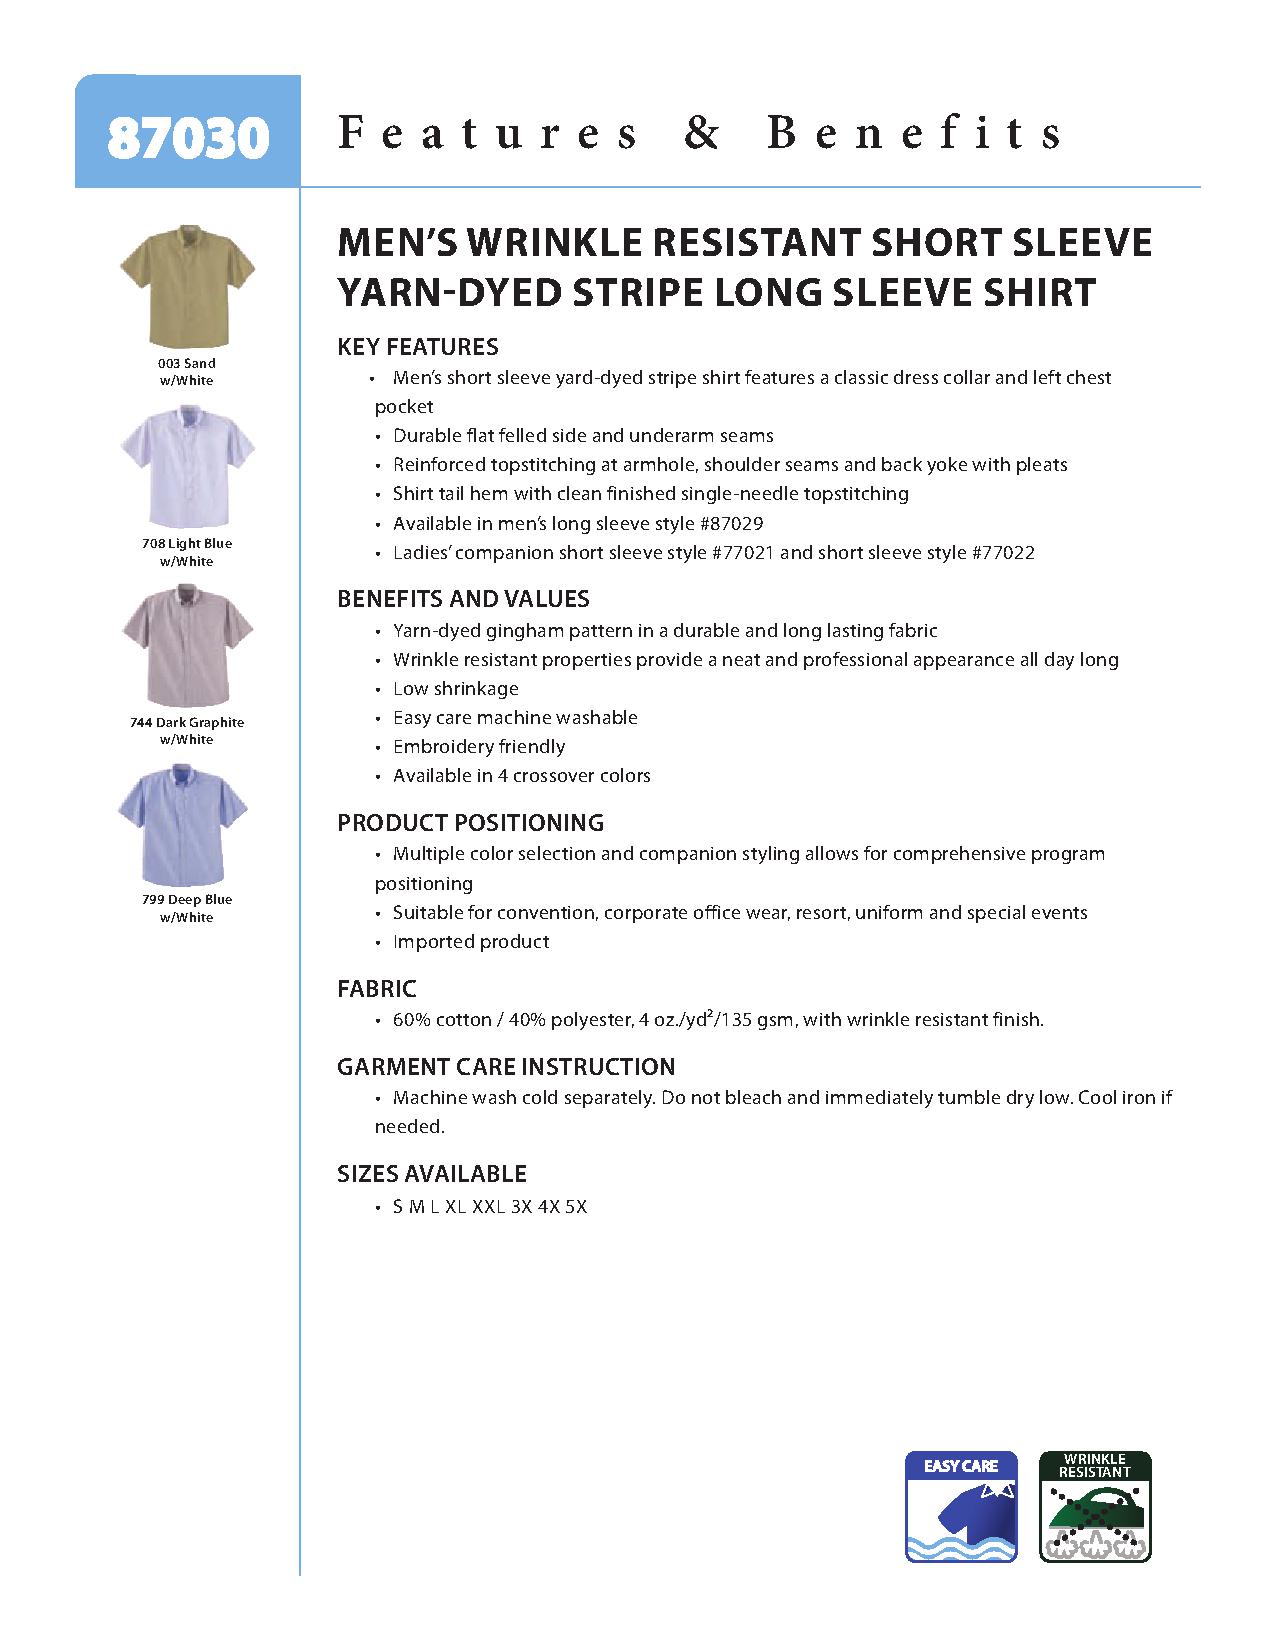 Ash City Easy care 87030 - Men's Short Sleeve Wrinkle Resistant Yarn-Dyed Shirt